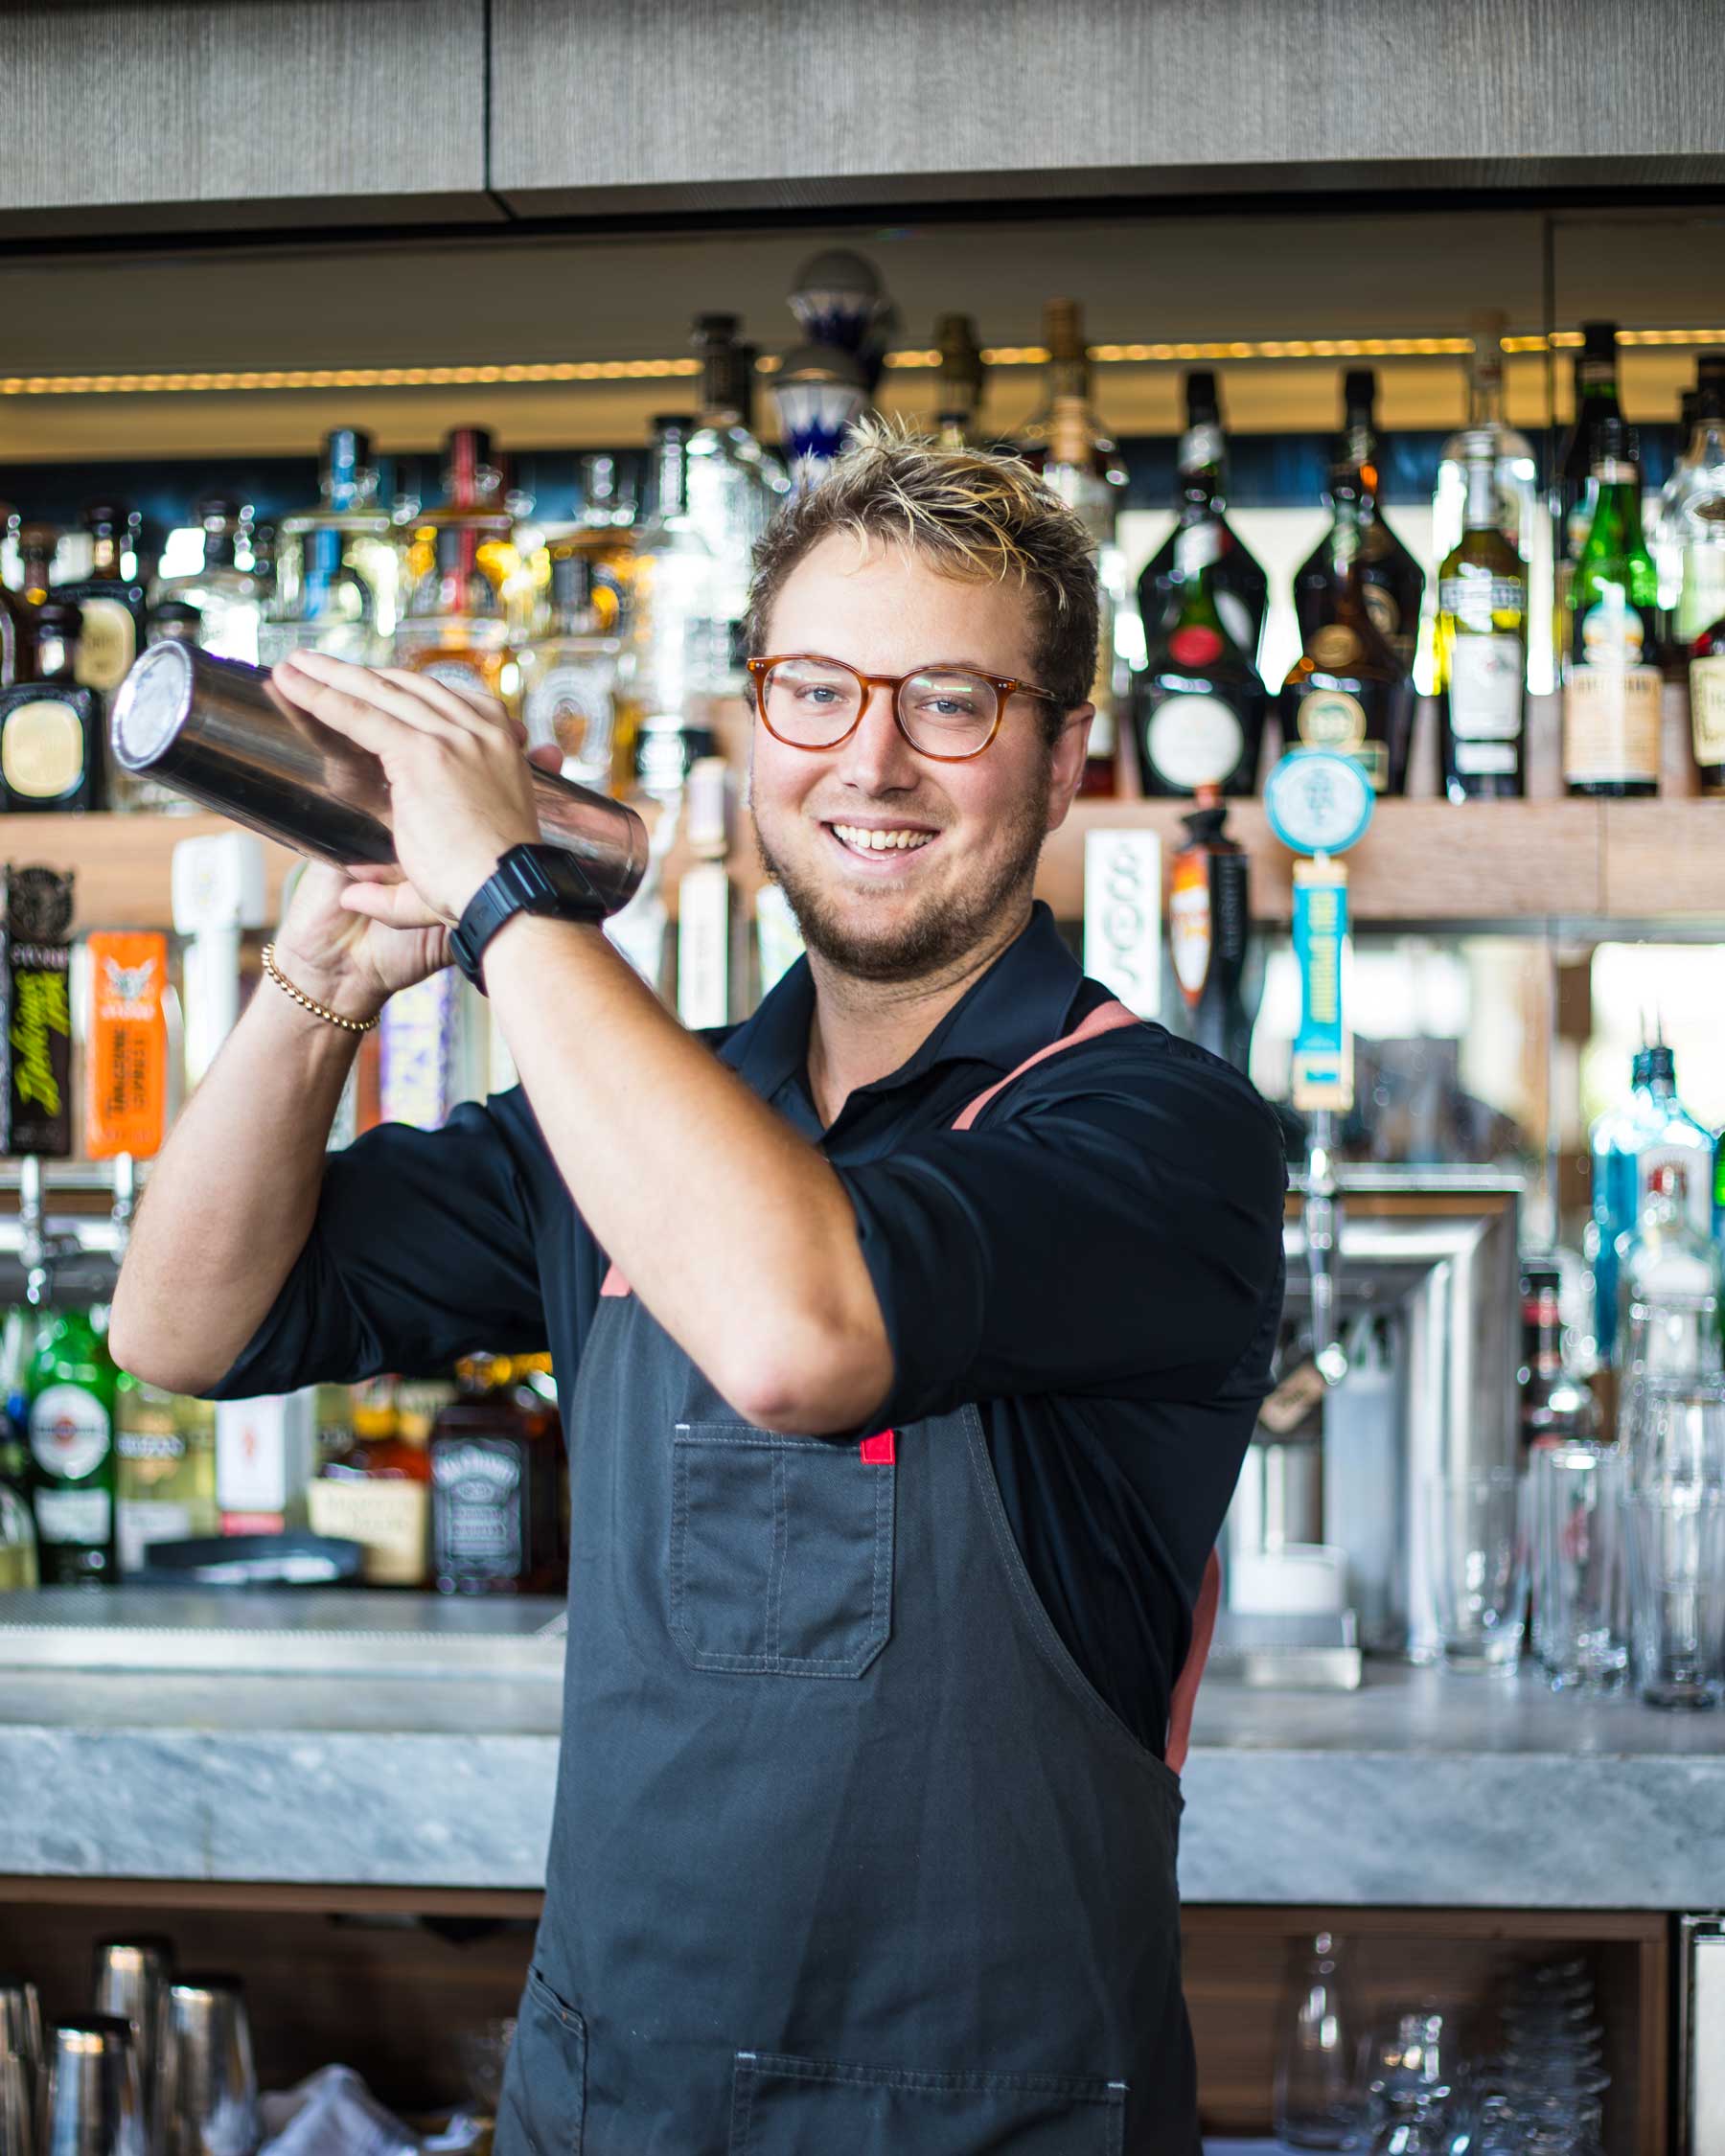 Smiling bartender making a drink behind the bar